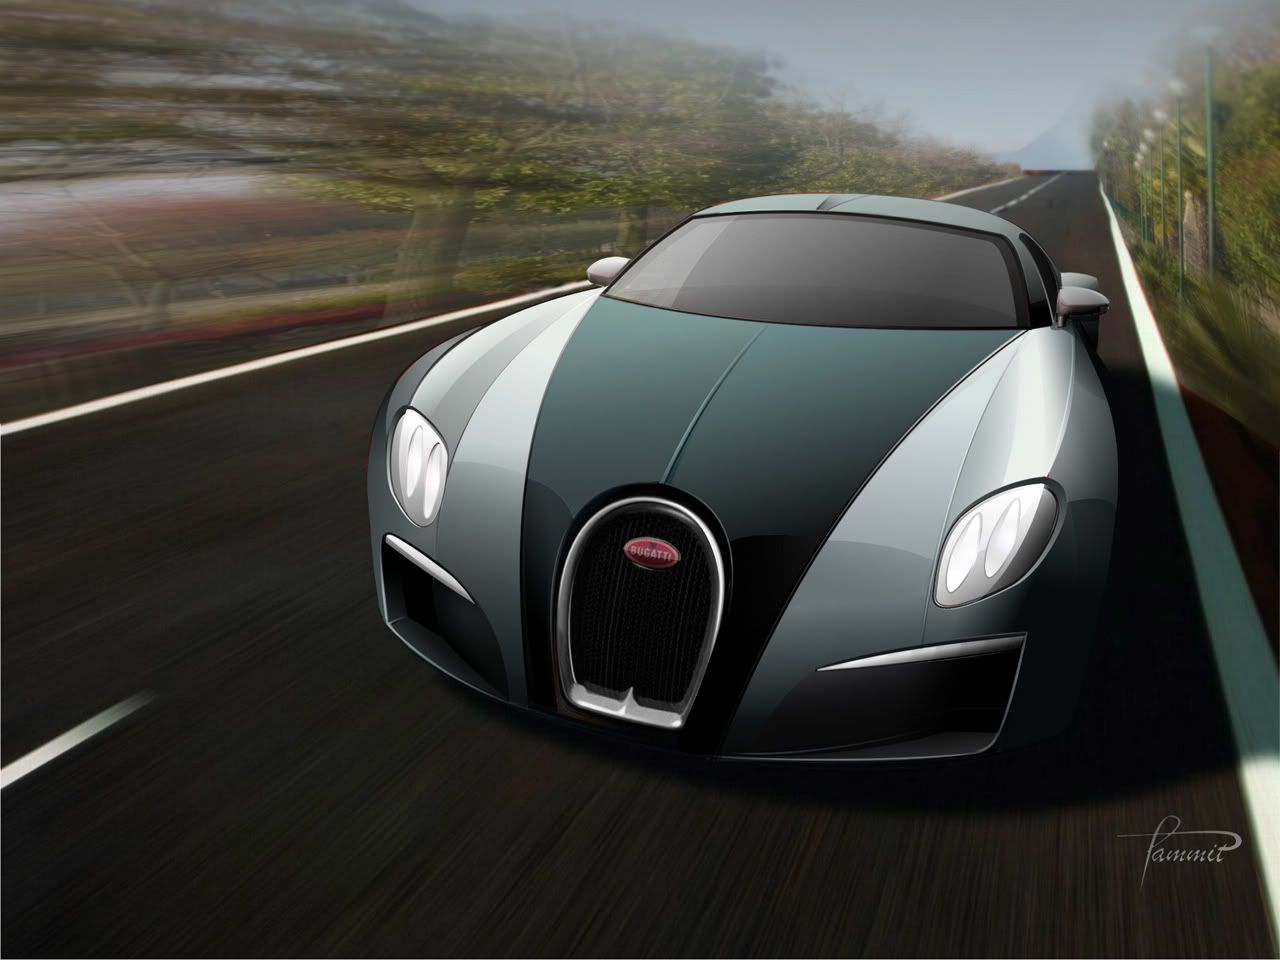 Bugattitype12front.jpg